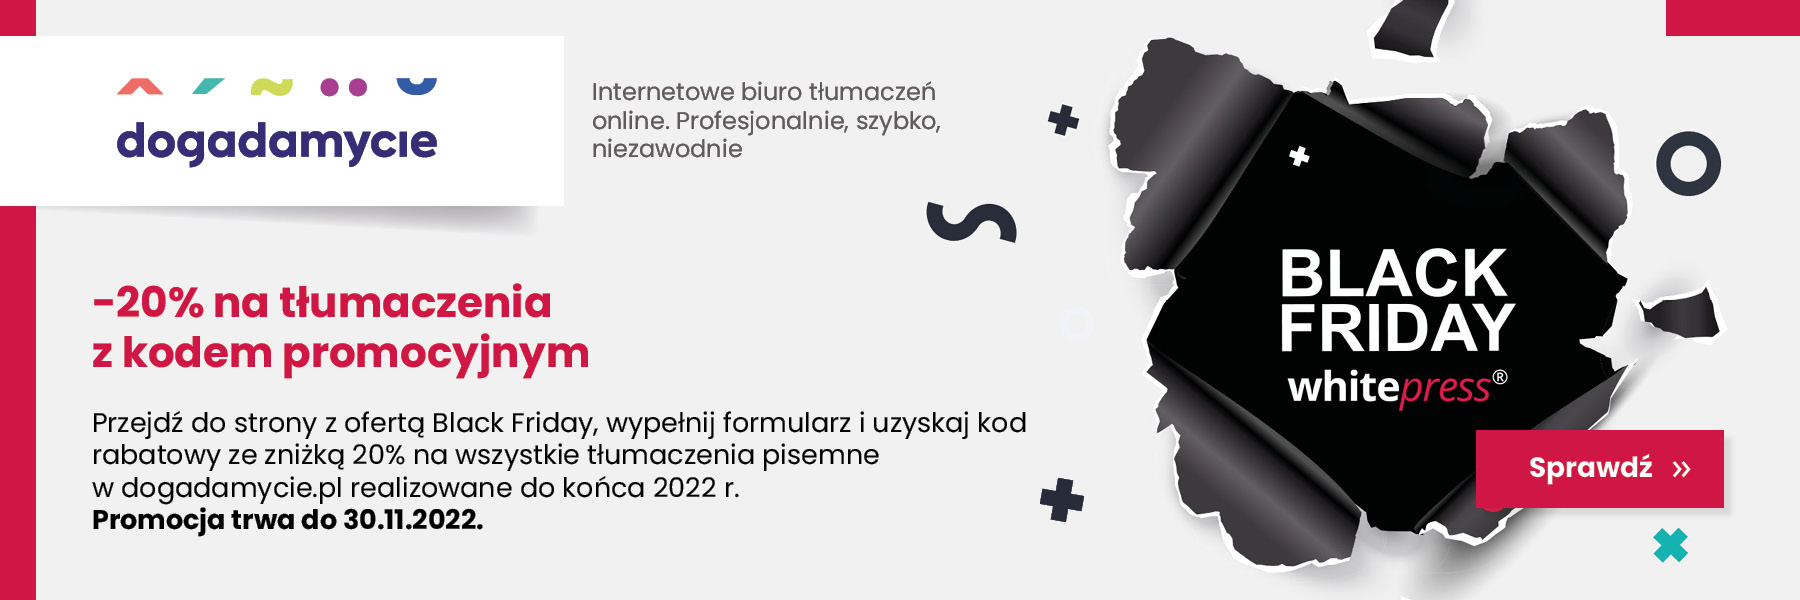 Dogadamycie.pl promocja na Black Friday 2022